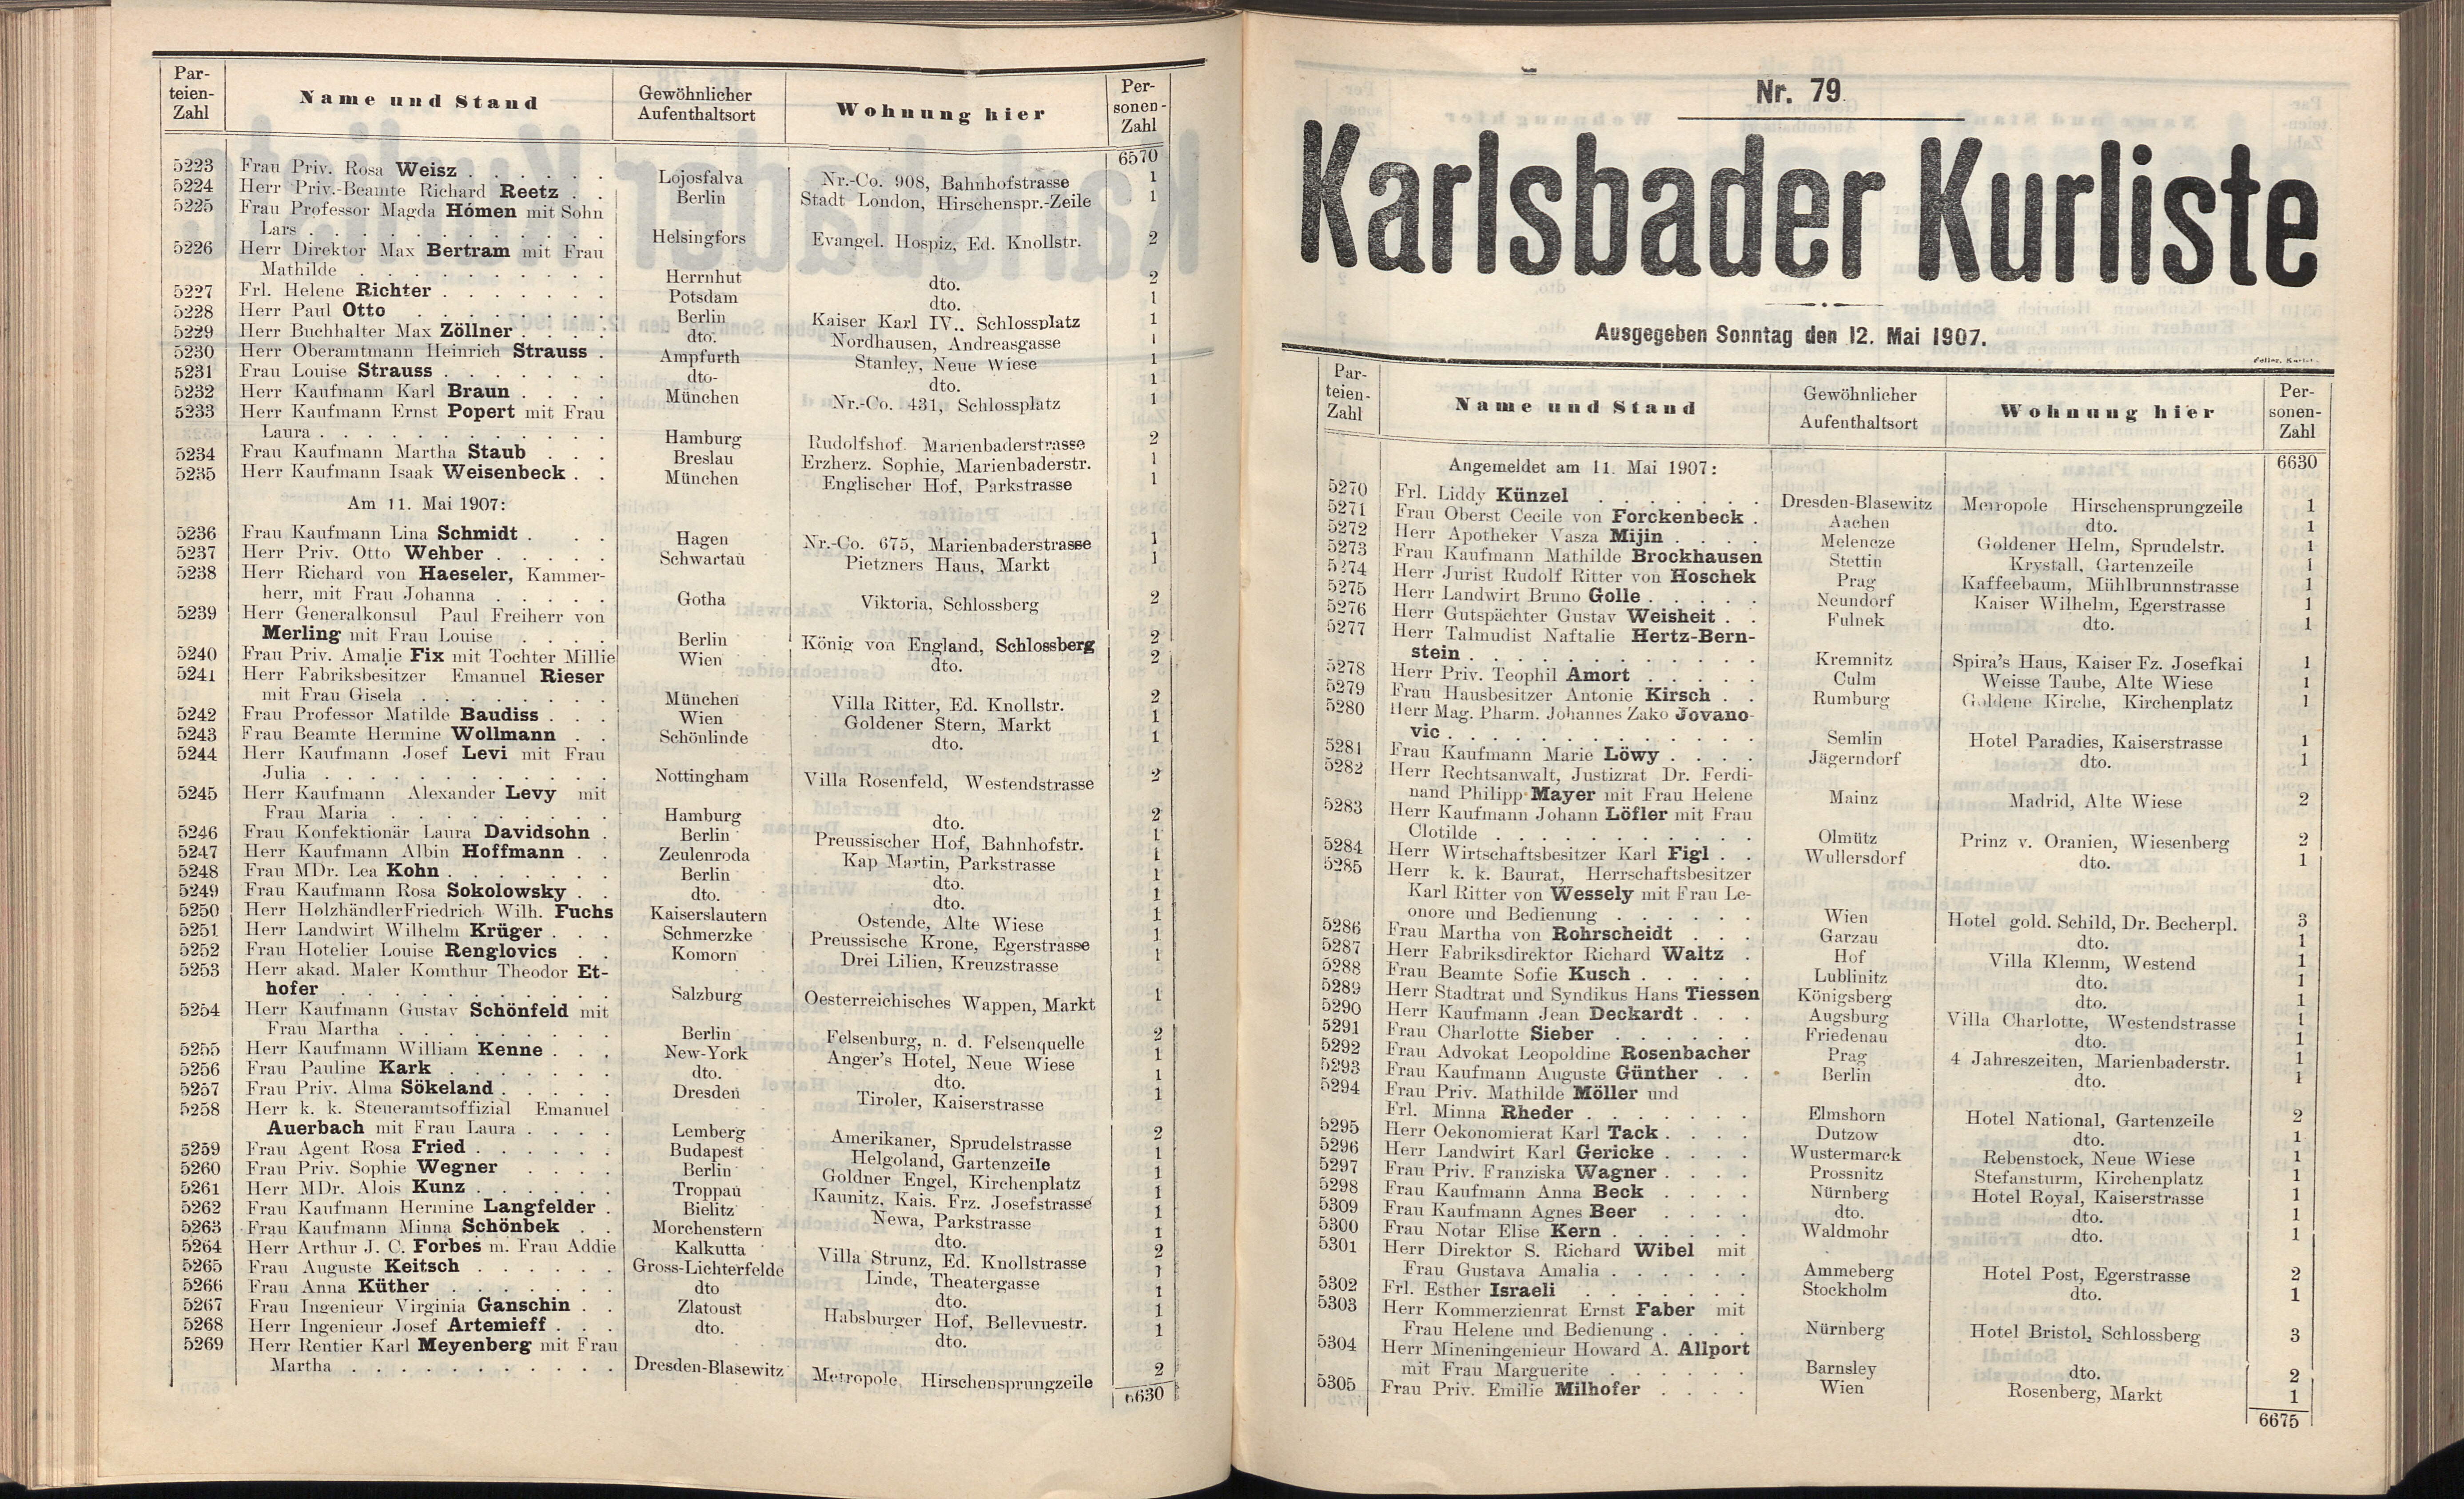 192. soap-kv_knihovna_karlsbader-kurliste-1907_1930